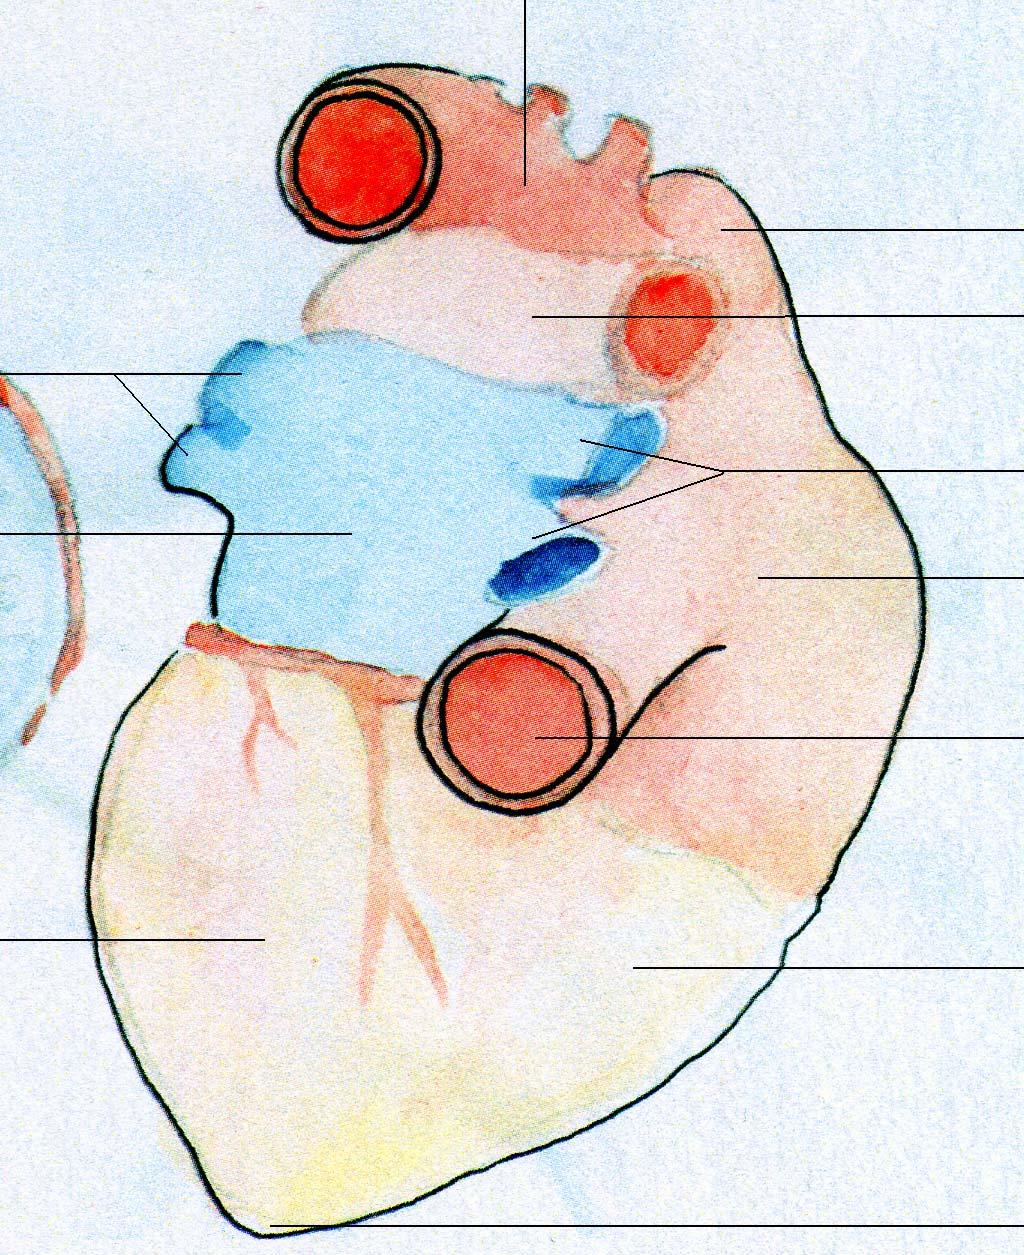 Het hart (caudal) De aortaboog V. cava superior Vv. pulmonalis sinistrae Atrium sinistrum/ linker atrium A. pulmonalis dextra Vv.